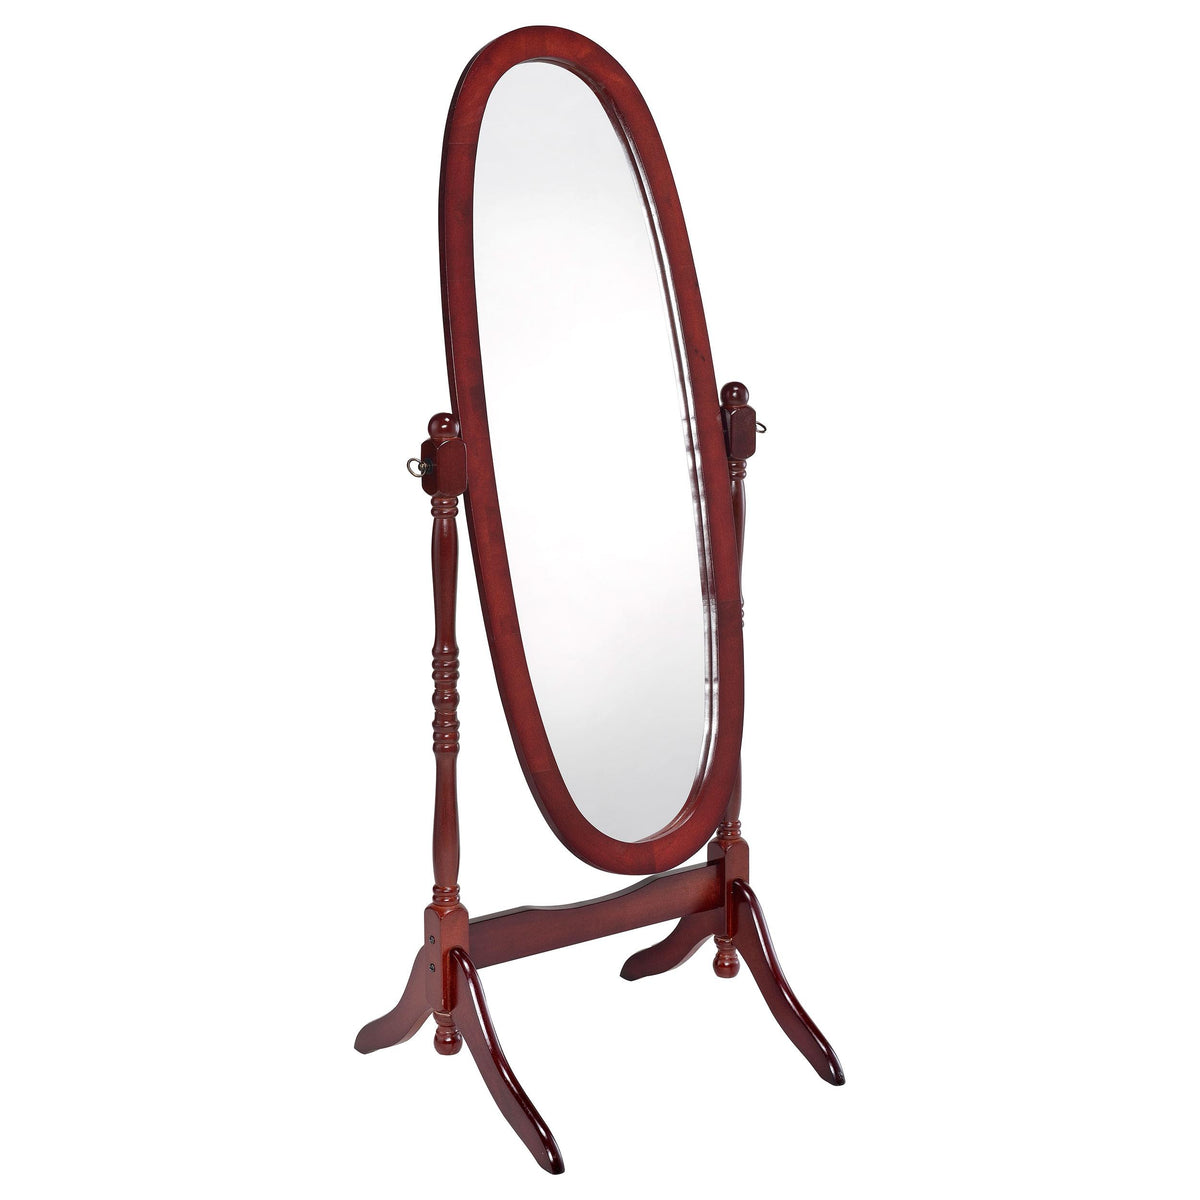 Foyet Oval Cheval Mirror Merlot Foyet Oval Cheval Mirror Merlot Half Price Furniture